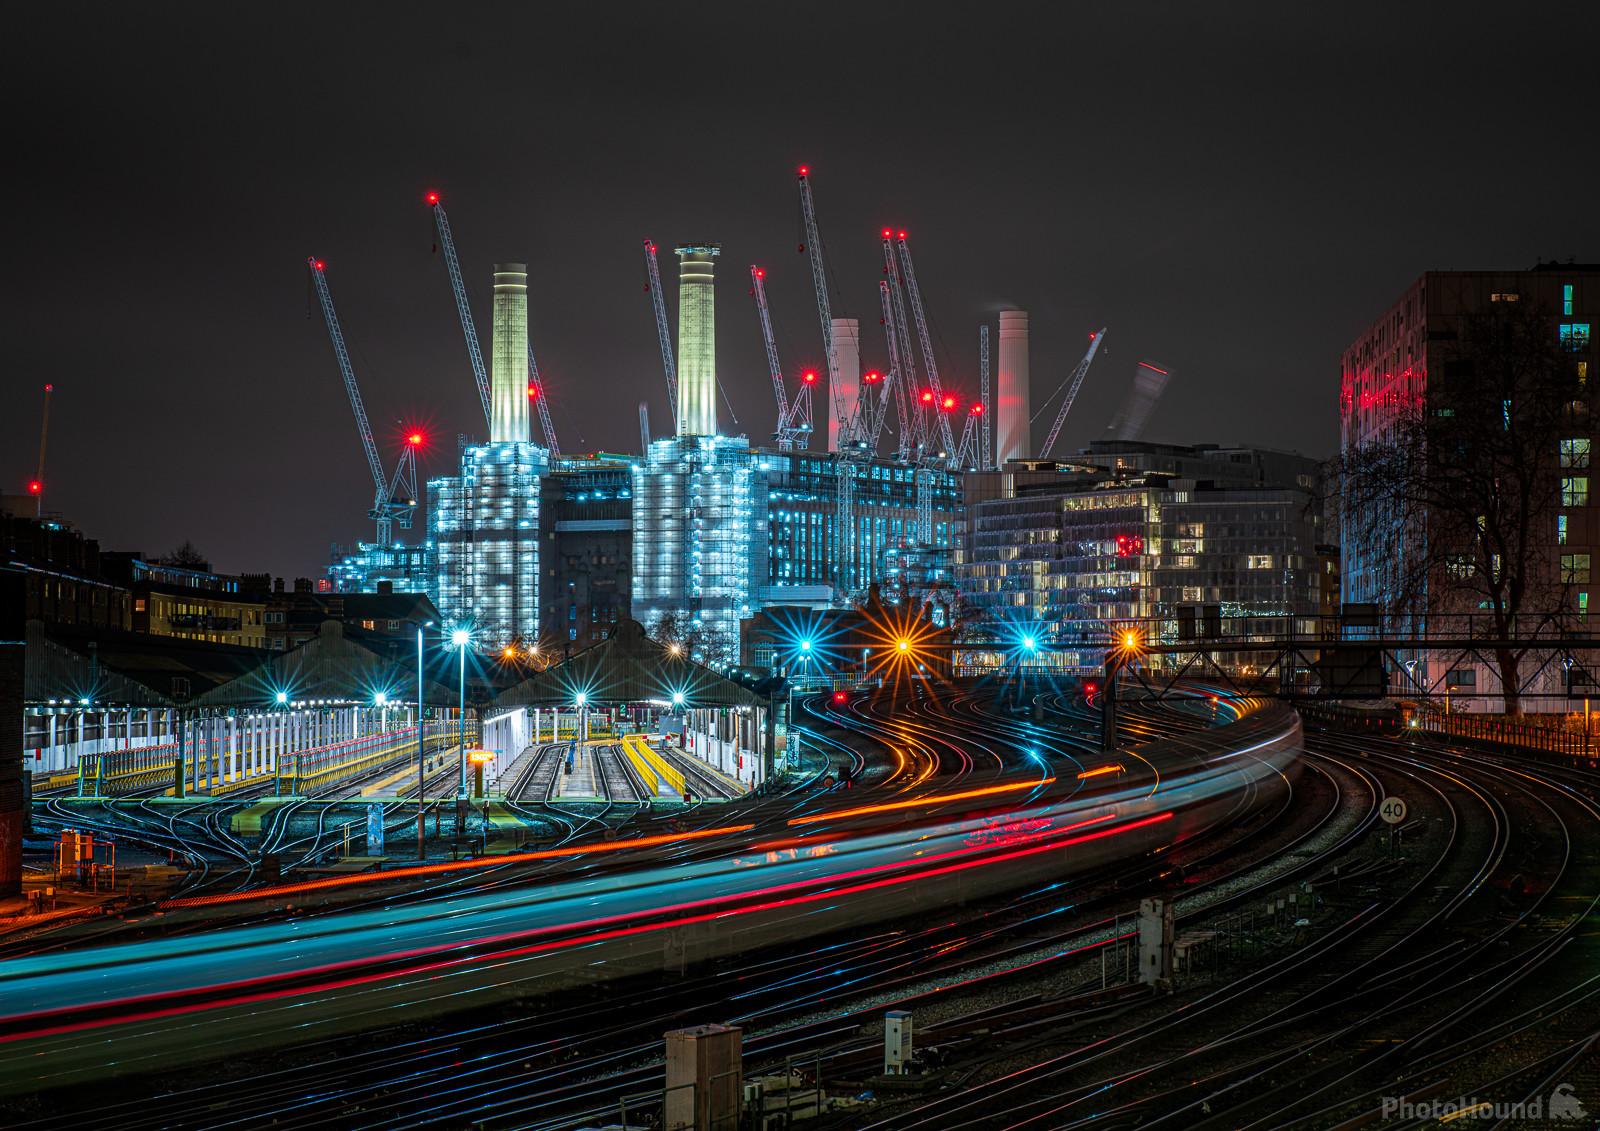 Image of Battersea Power Station from Ebury Bridge by JAMES BILLINGS